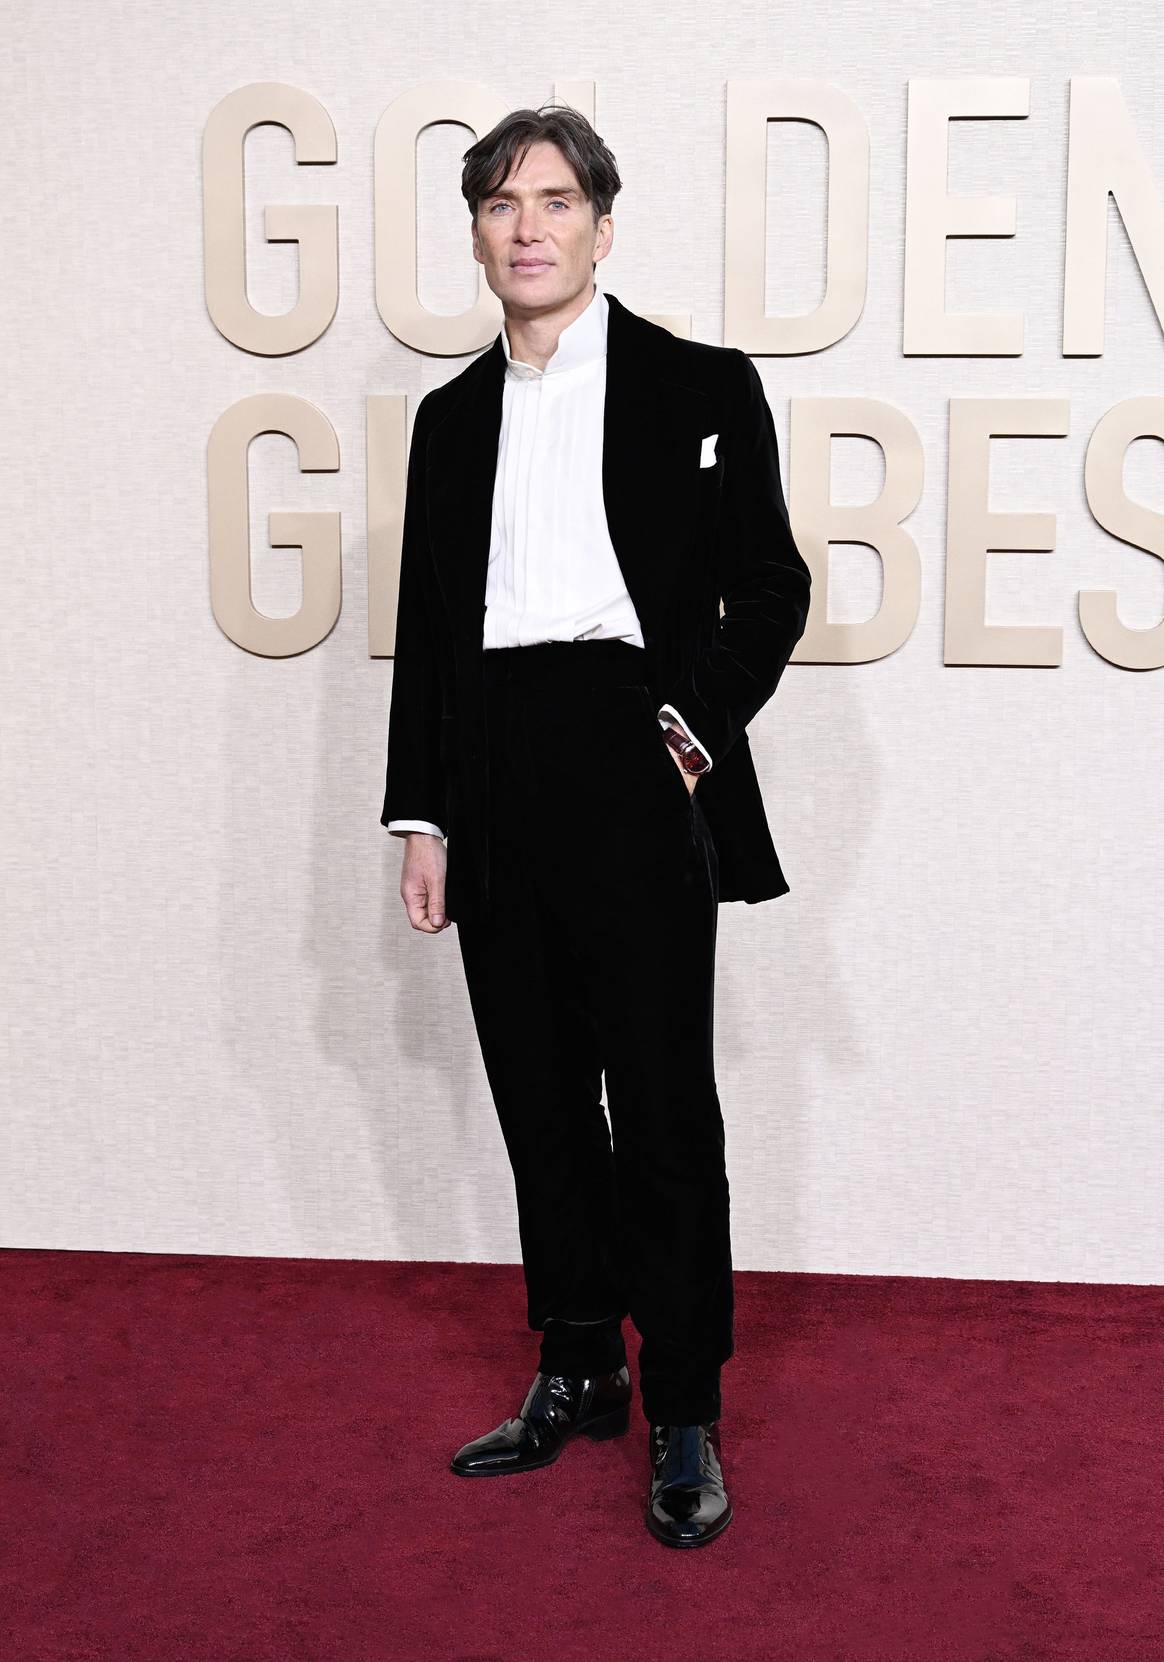 Cillian Murphy wearing Yves Saint Laurent at the Golden Globes.